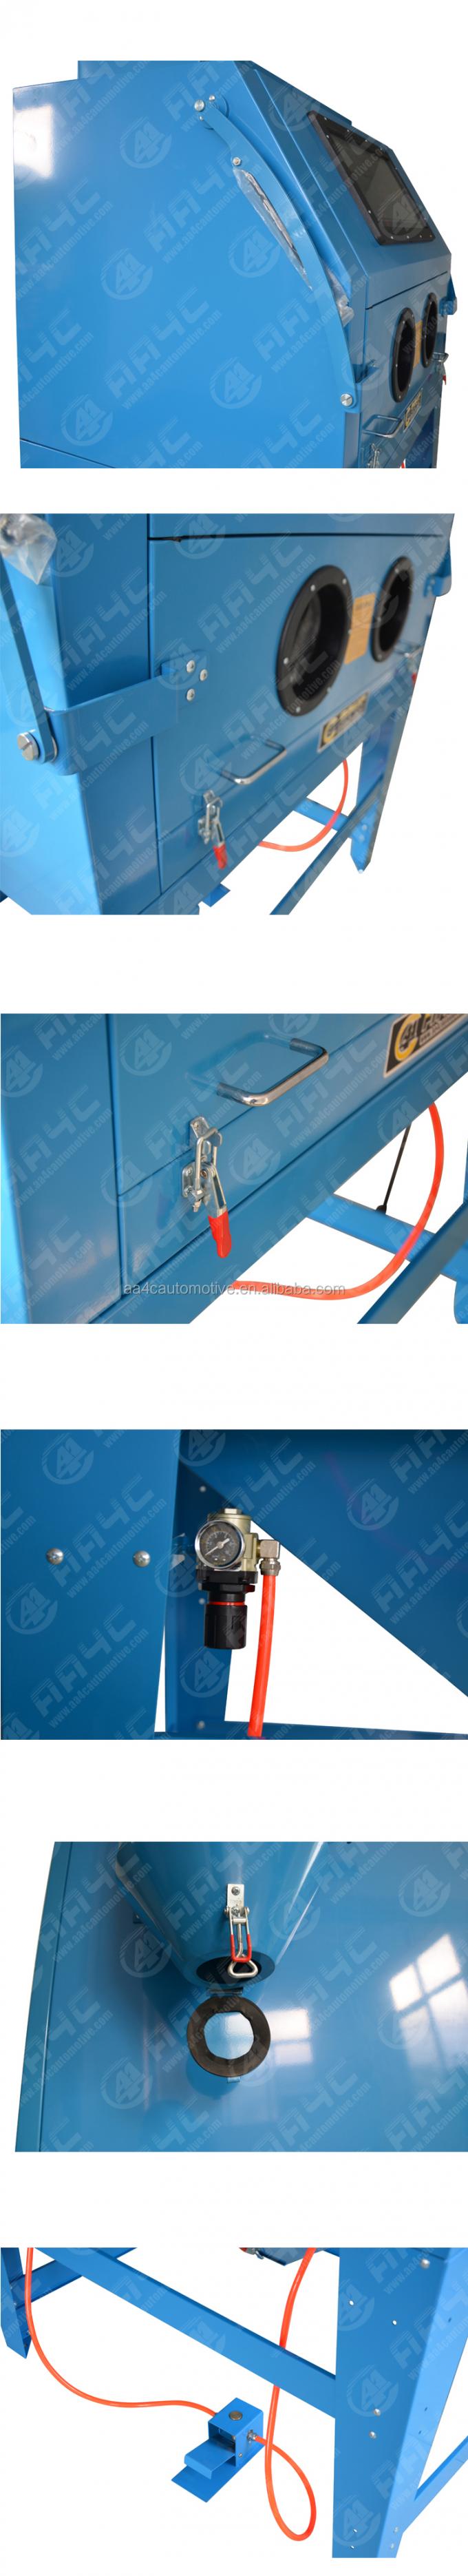 промышленный sandblaster шкафа 990L. AA-SBC990